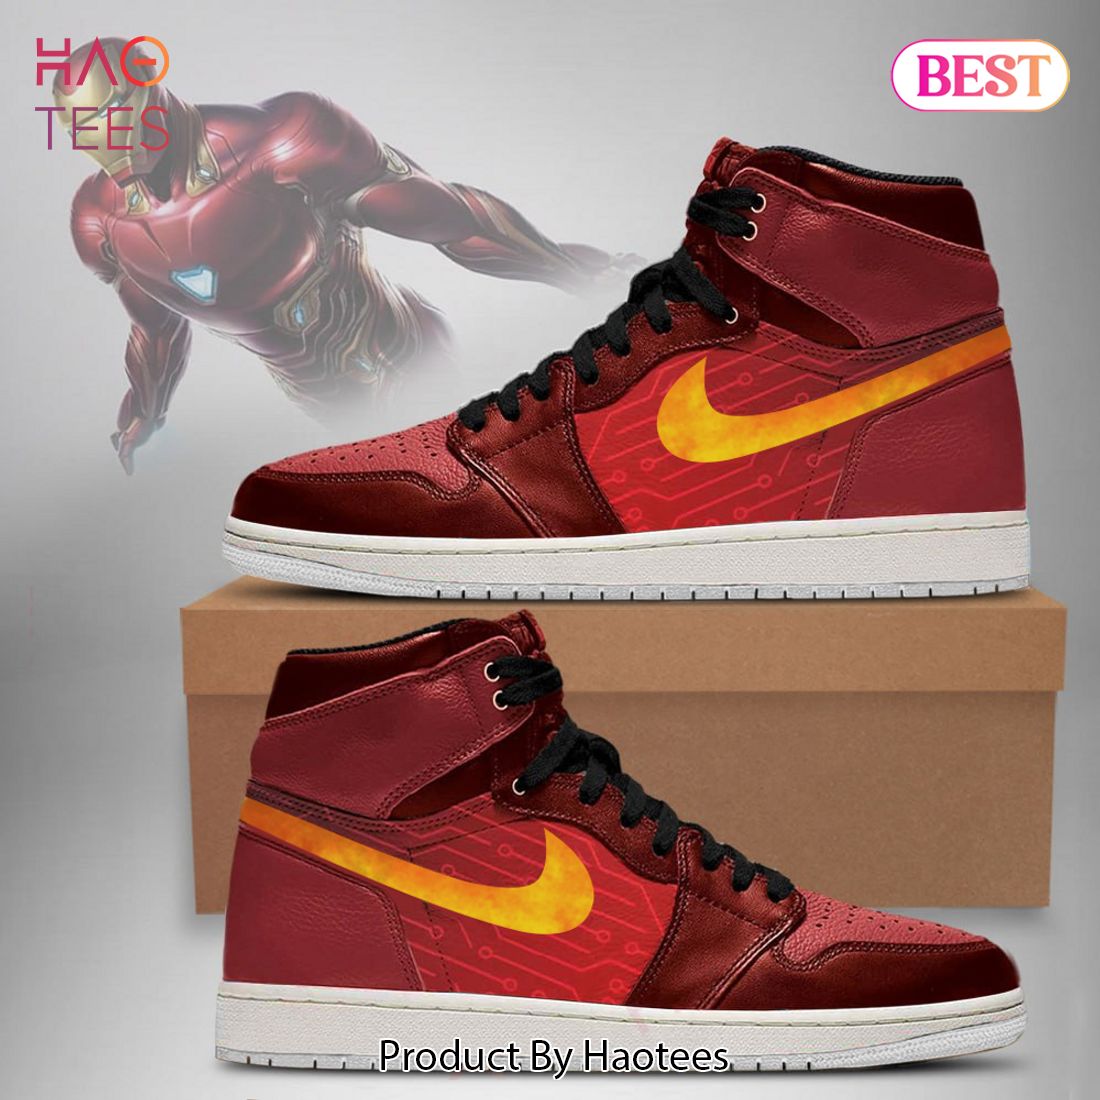 SALE] Marvel Avengers Ironman Air Jordan High Top Sneaker Limited Edition